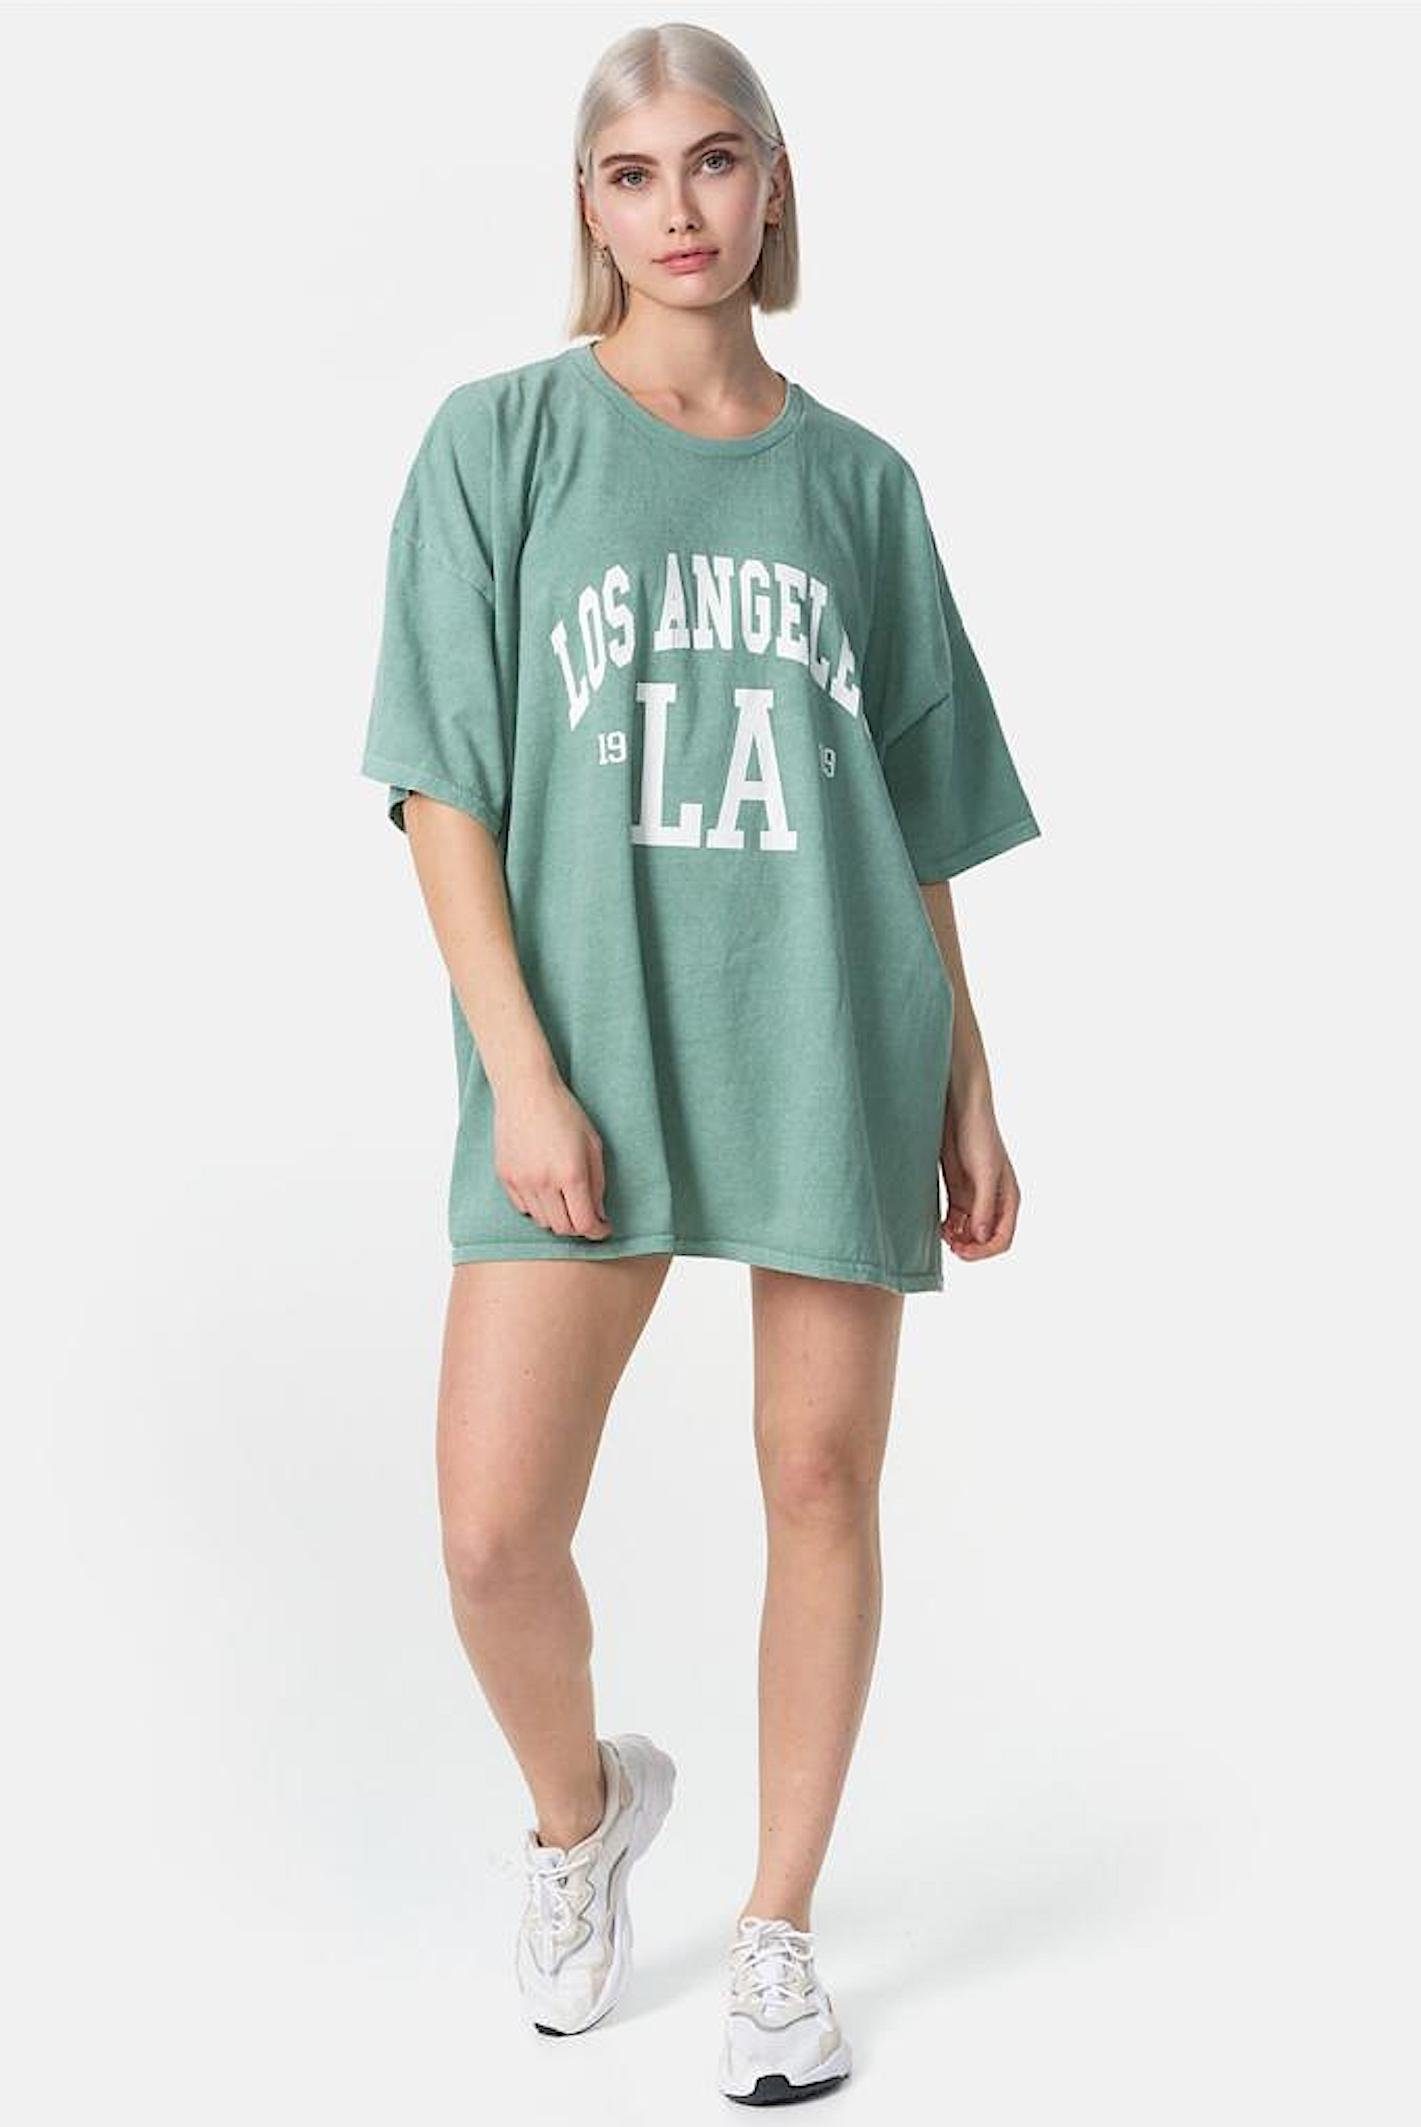 Worldclassca T-Shirt Worldclassca Oversized LA LOS ANGELES Print T-Shirt lang Sommer Tee Mint